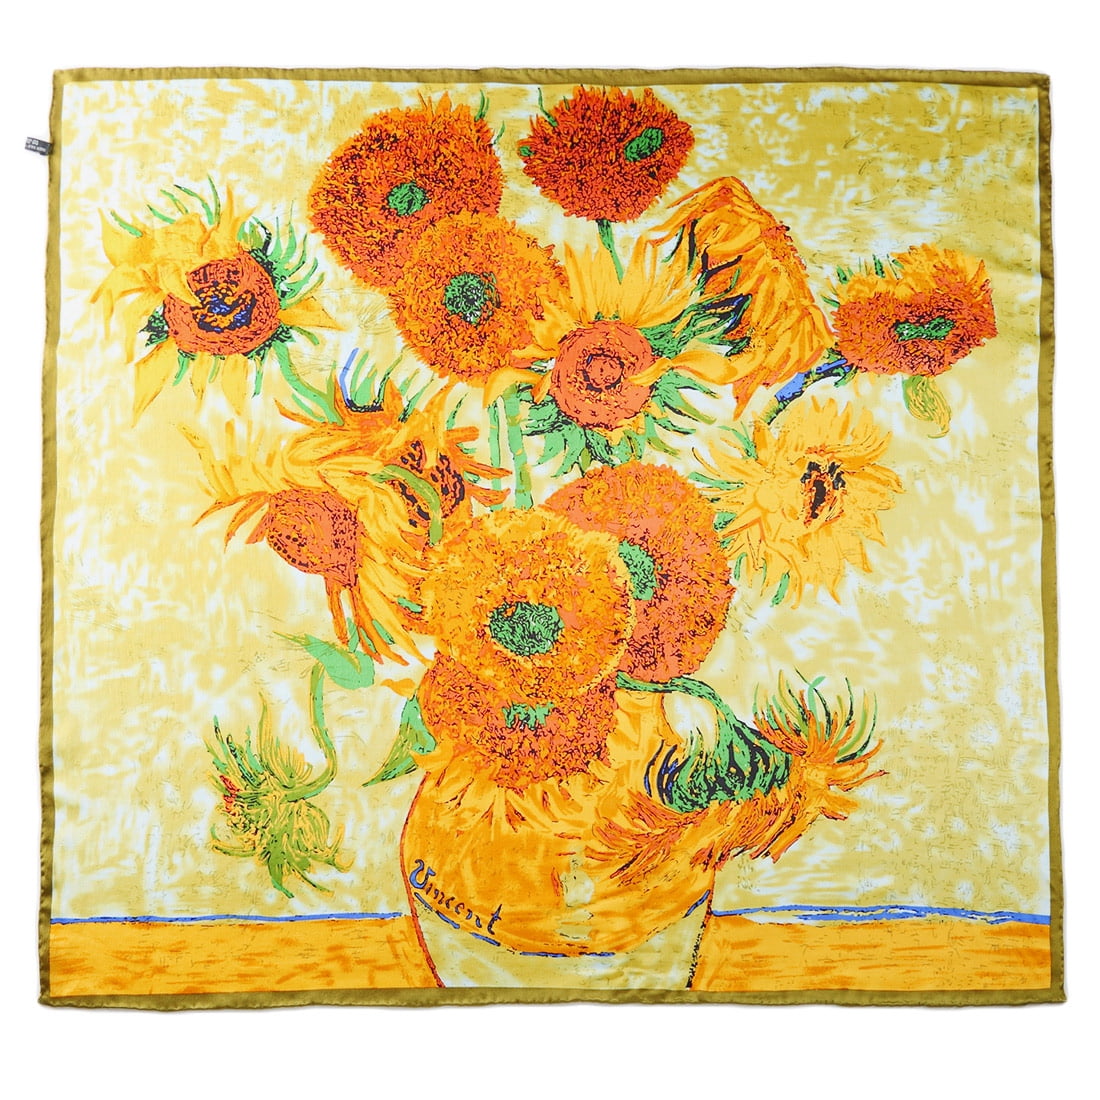 Grace Scarves 100% Silk Scarf Artists Collection van Gogh & Monet Large 